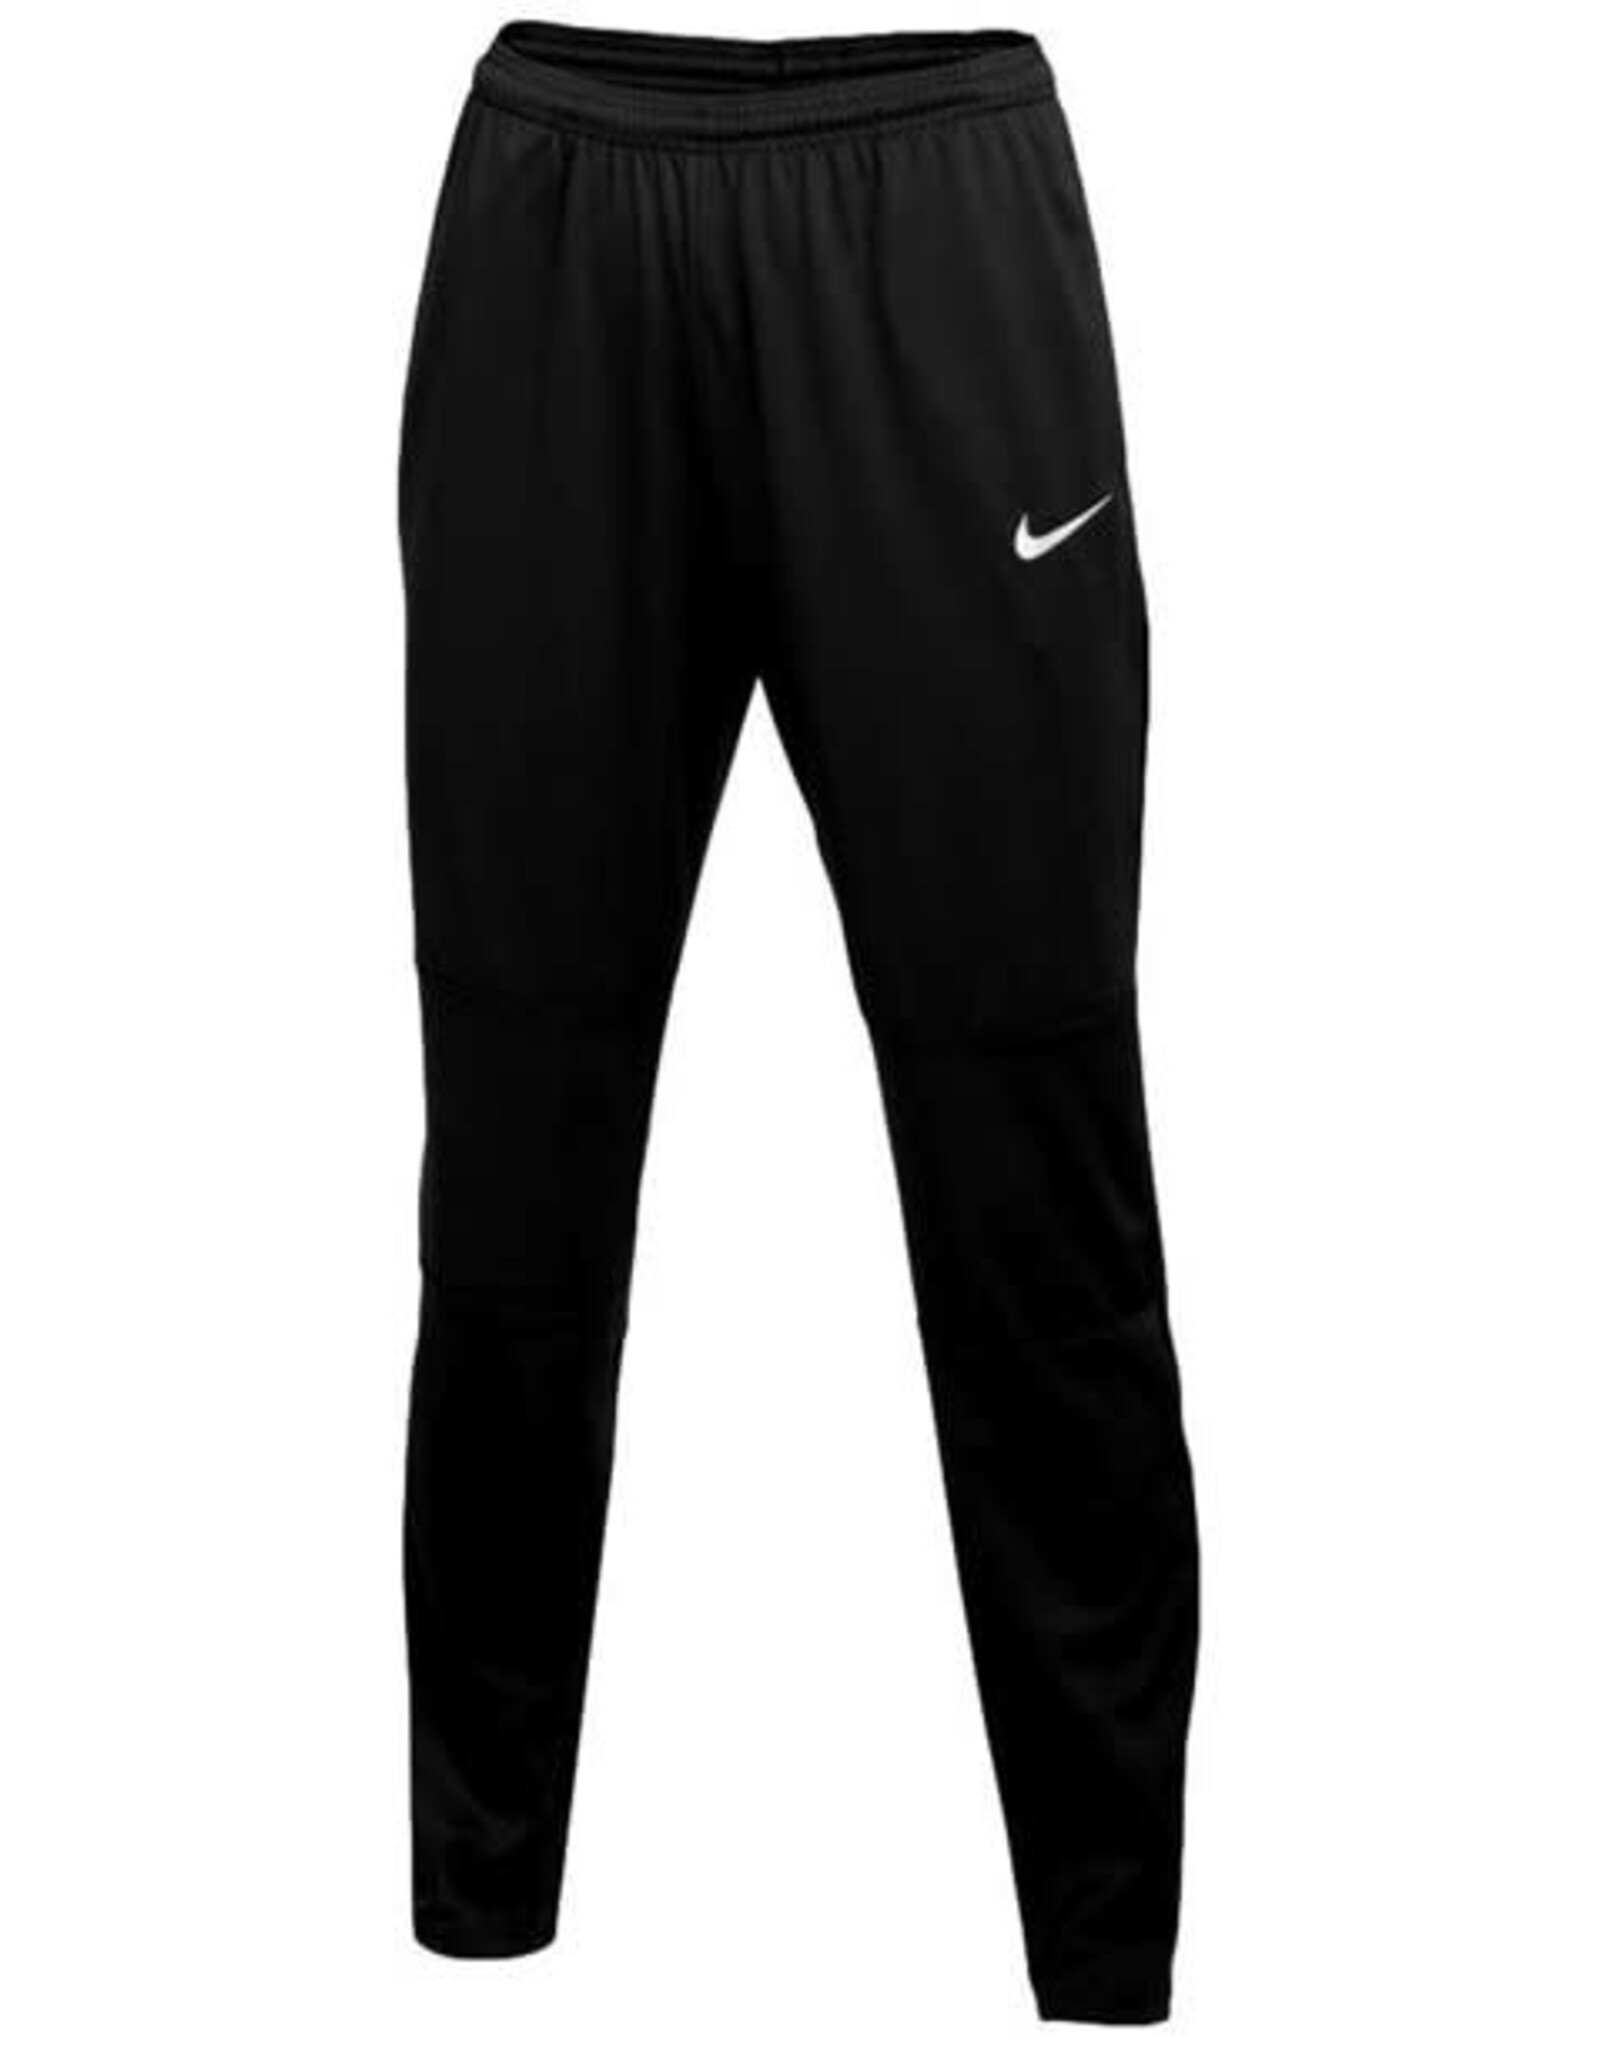 Nike Nike Dry Pants